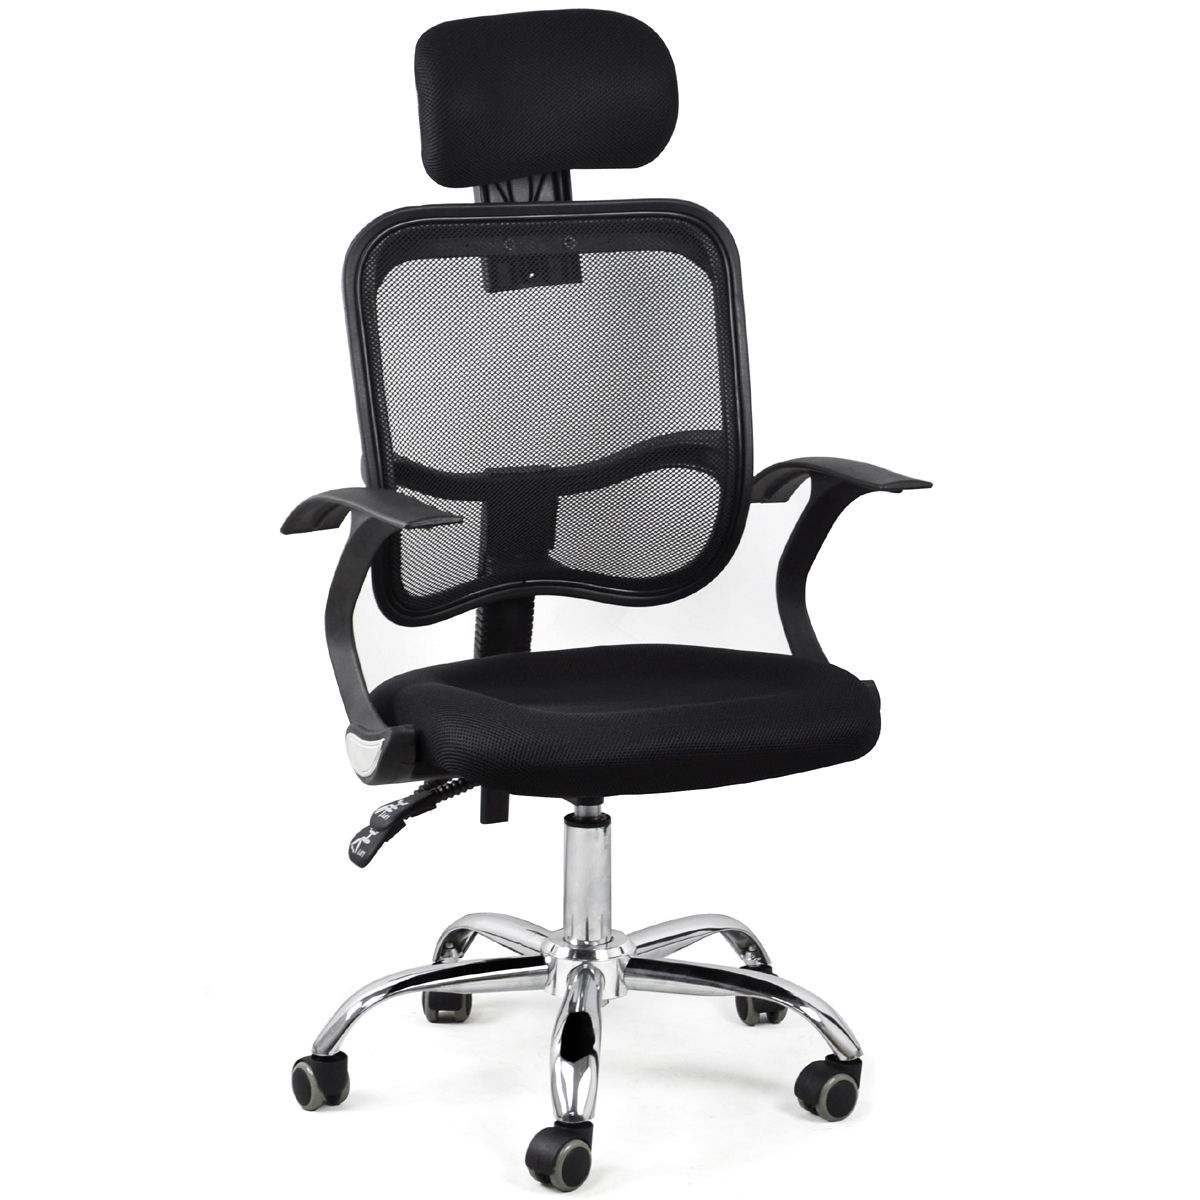 Executive mesh chair with headrest black